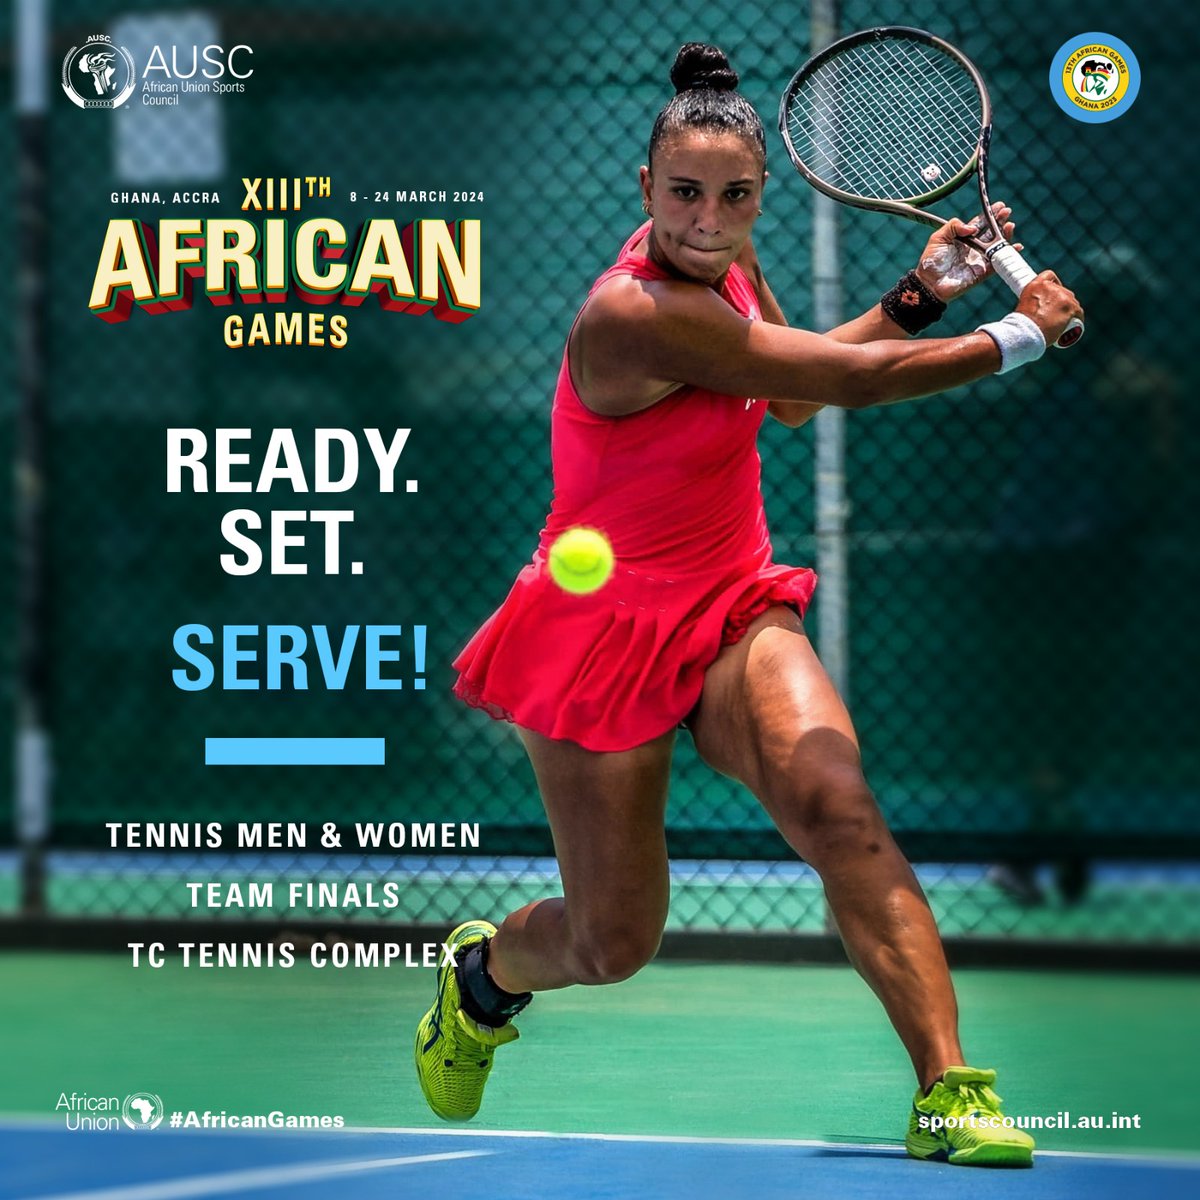 #AfricanGames tennis medal matches 👇 Cameroon 🇨🇲 vs Ghana 🇬🇭 (Men's 3rd-4th Place) Kenya 🇰🇪 vs Ghana 🇬🇭 (Women's 3rd-4th Place) Kenya 🇰🇪 vs Egypt 🇪🇬 (Men's Final) Egypt 🇪🇬 vs Tunisia 🇹🇳 (Women's Final) #ExperienceTheAfricanDream